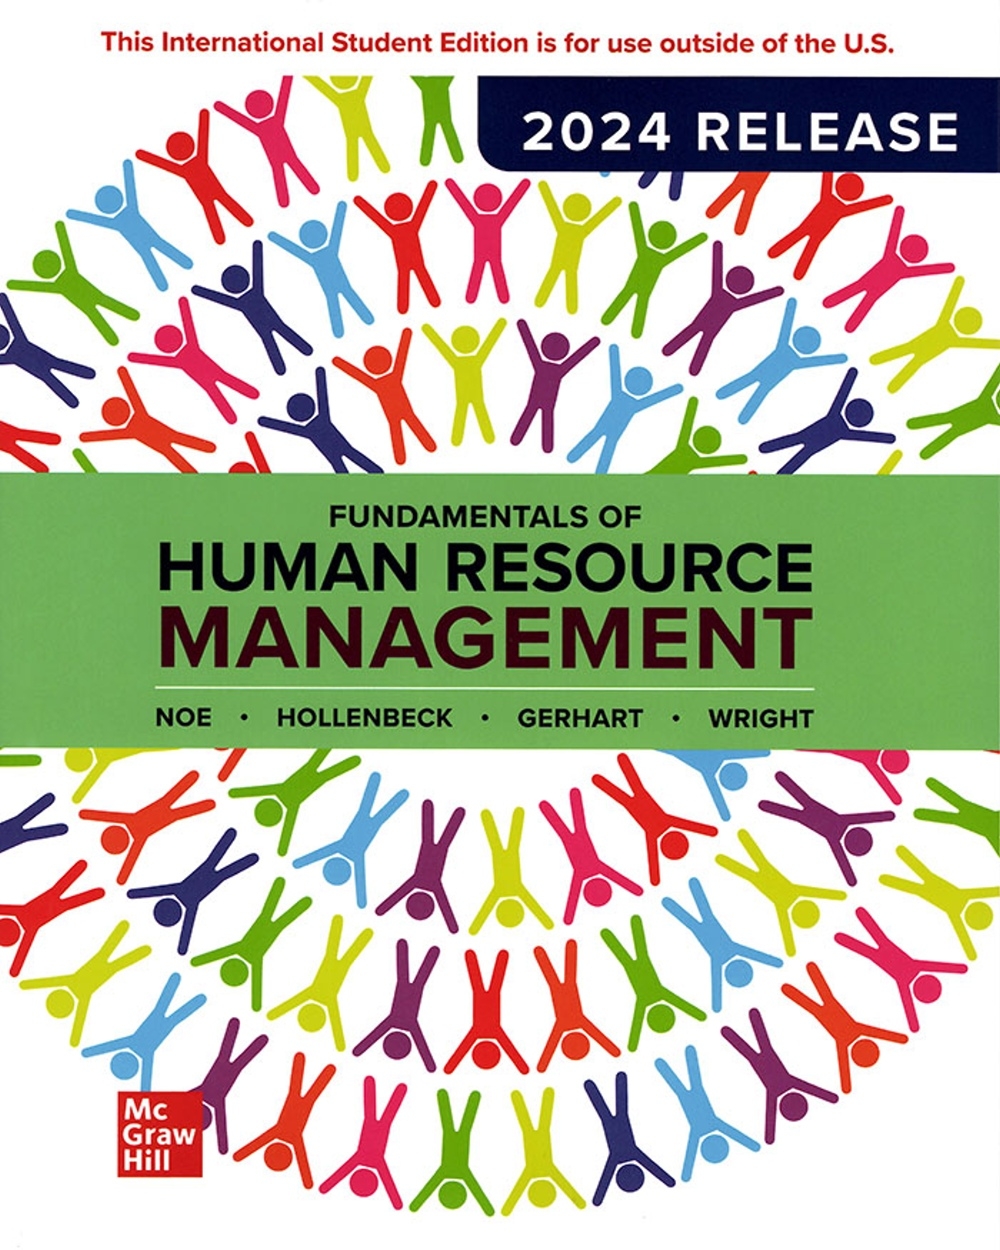 Fundamentals of Human Resource...